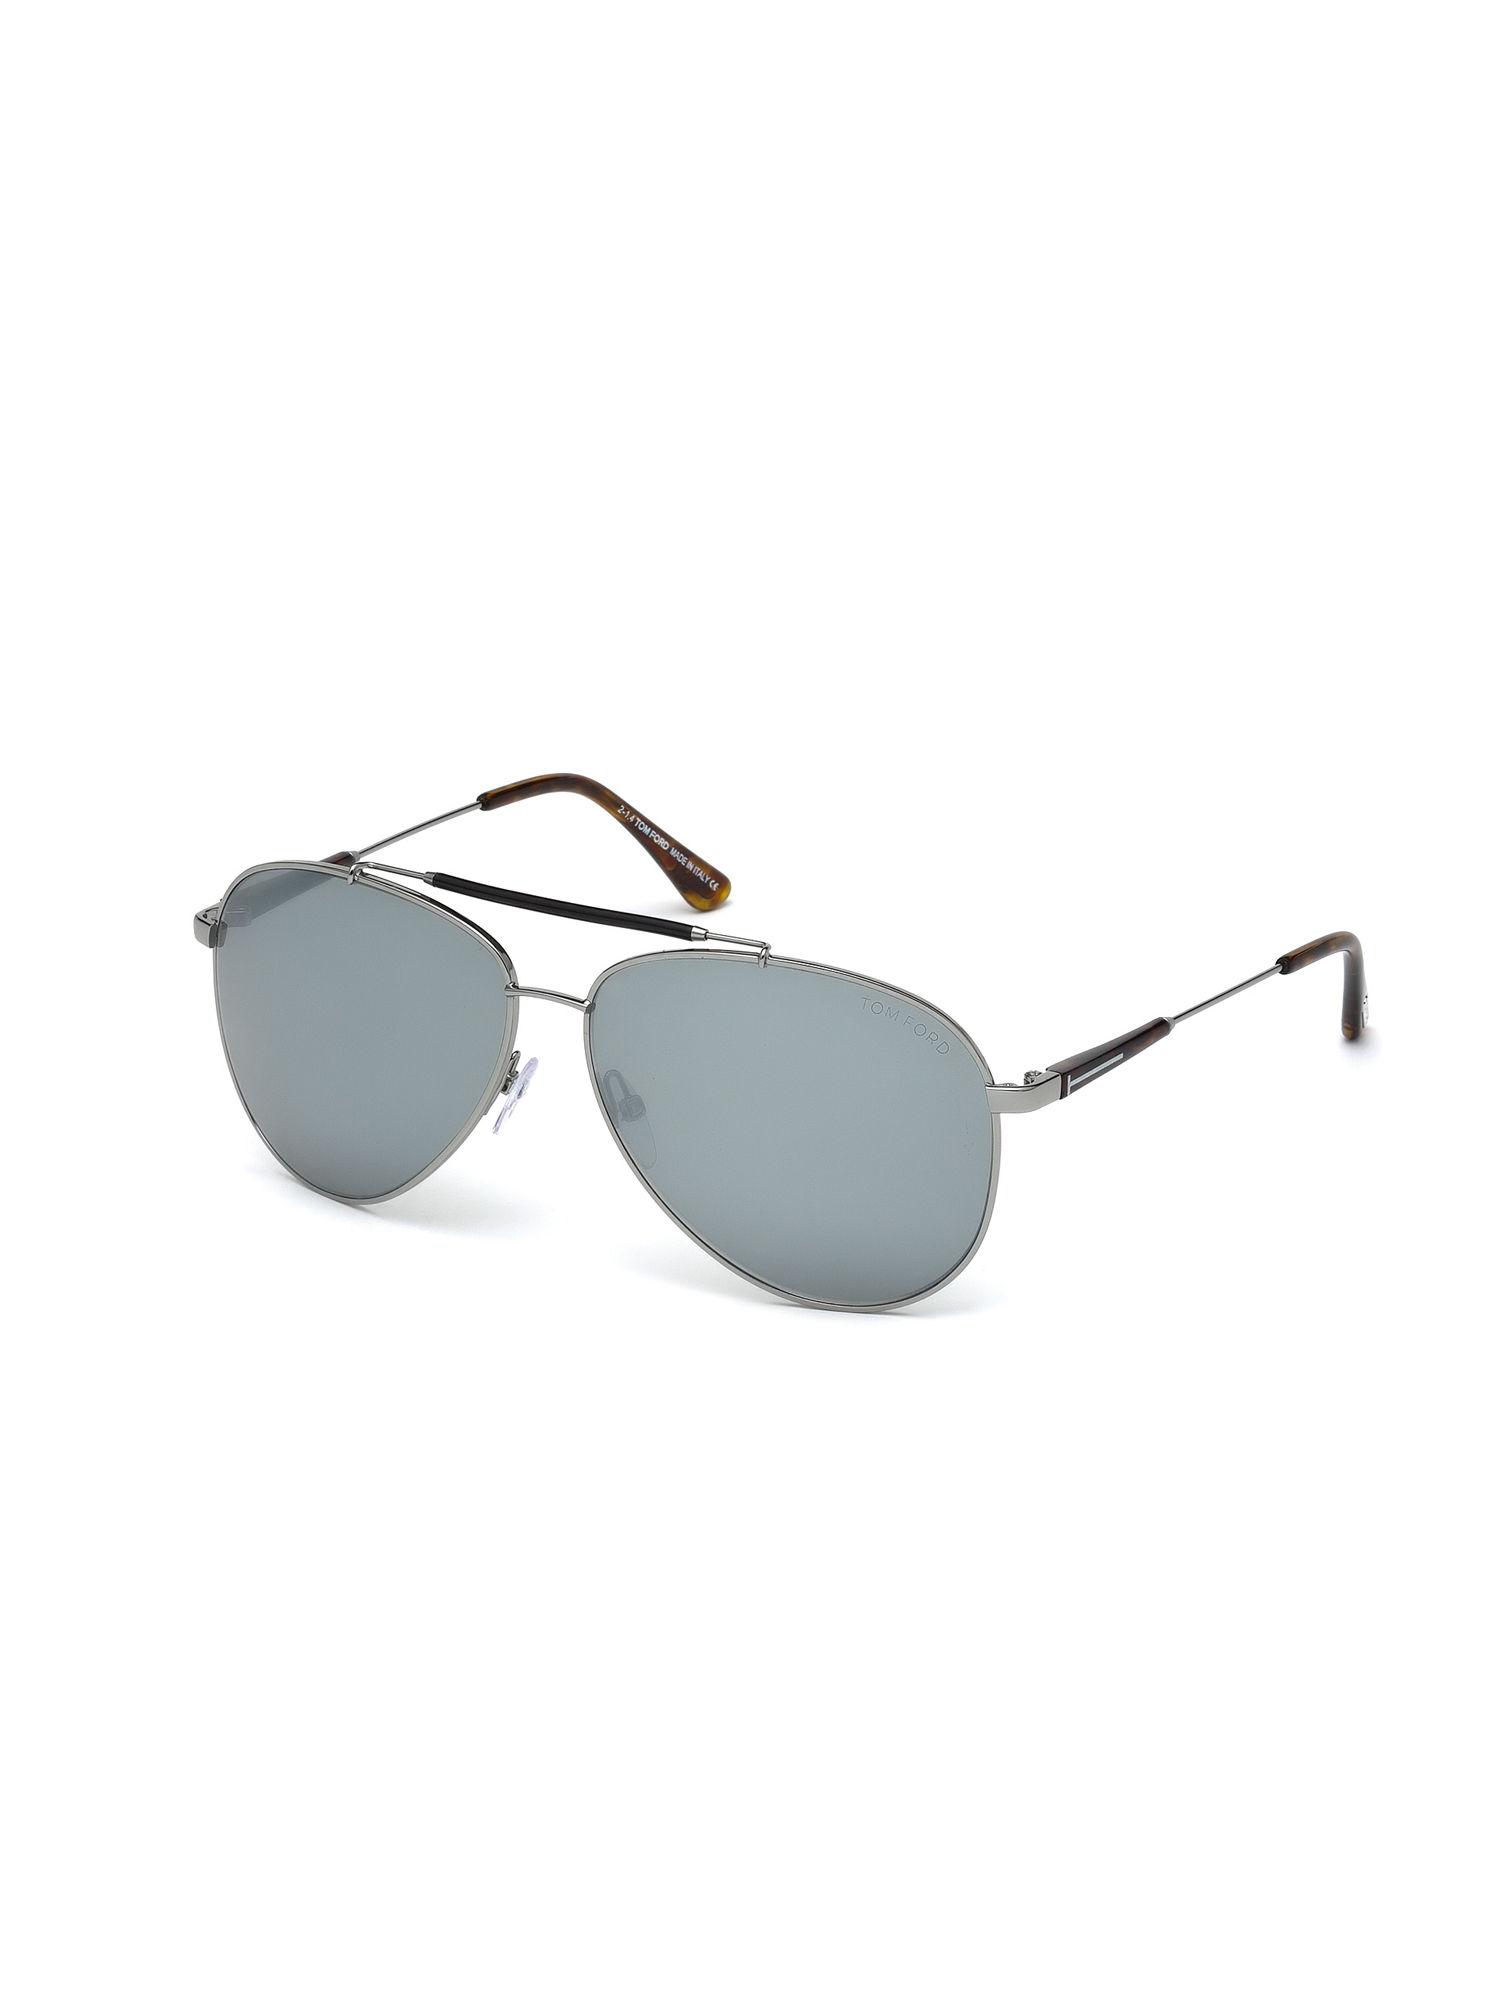 silver-aviator-sunglasses---ft0378-62-14q